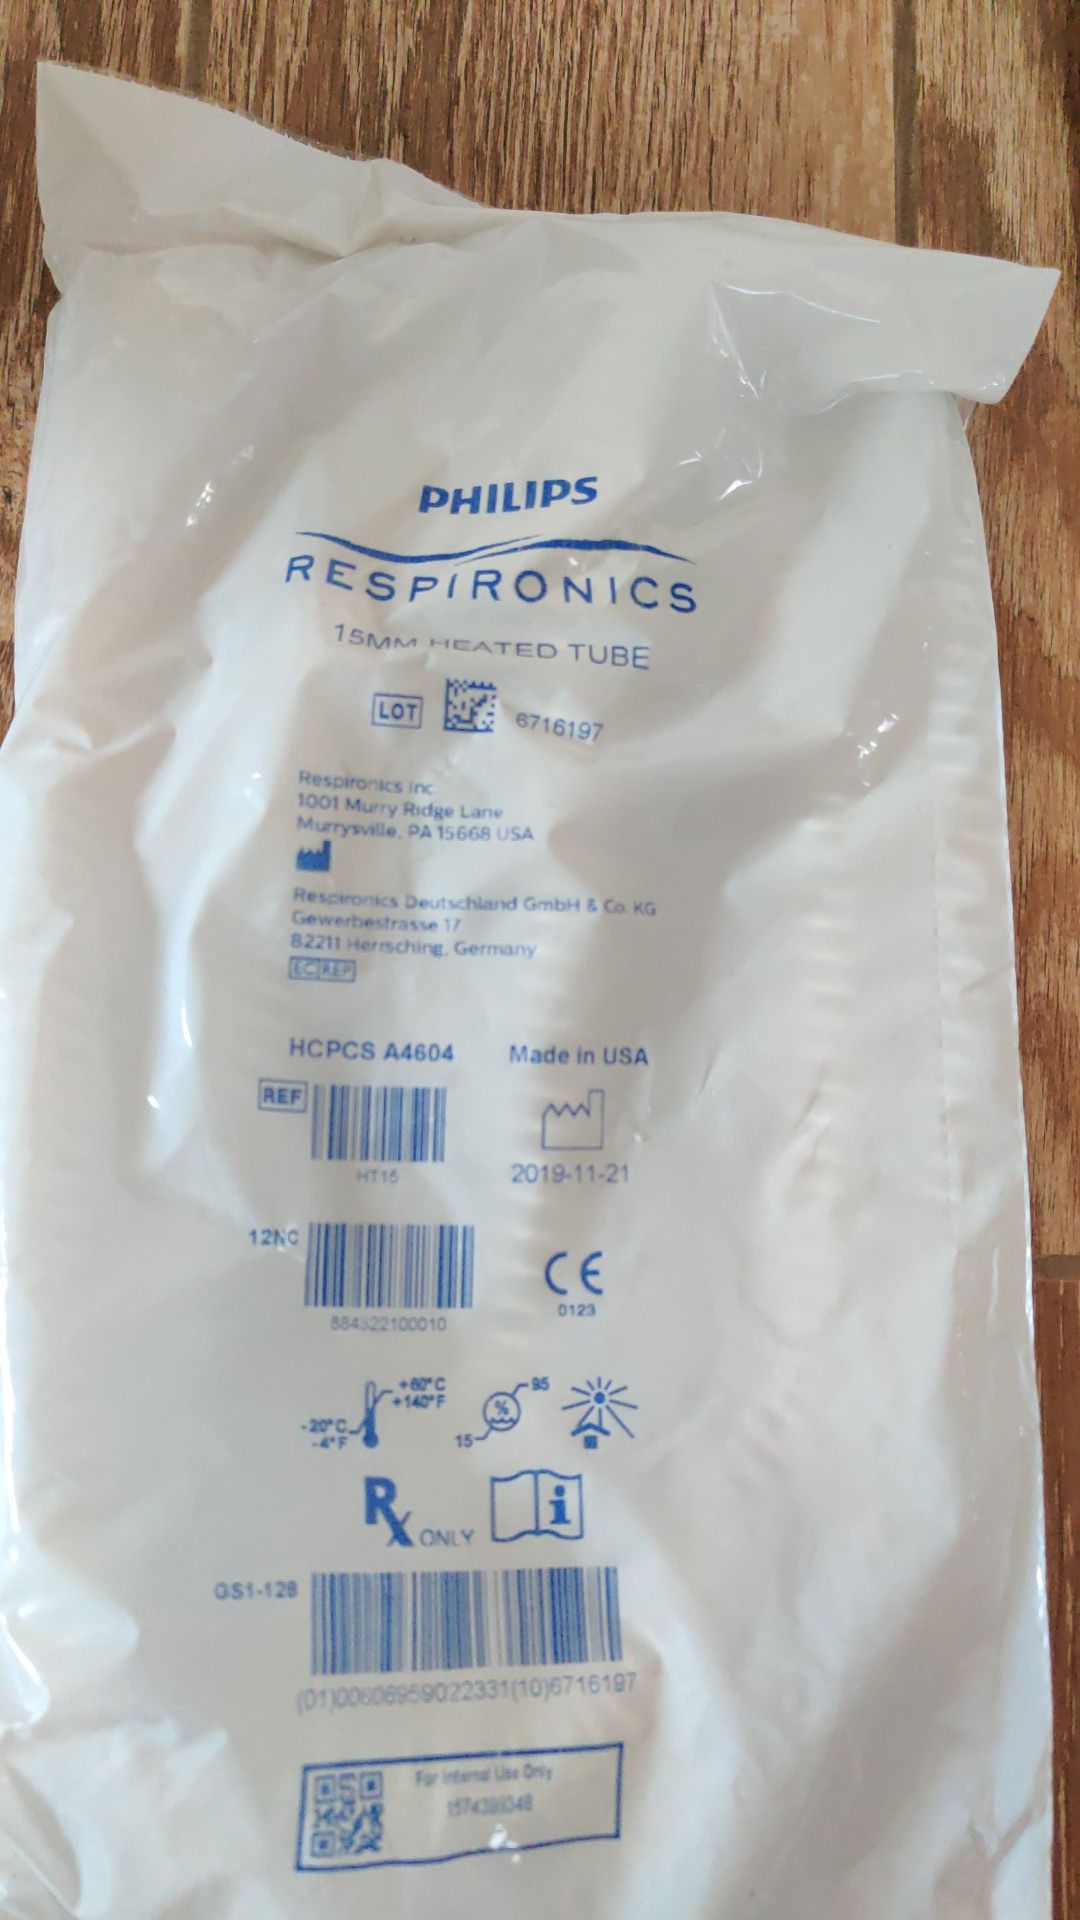 Philips Respironics 15mm heated CPAP Tube 3 pk